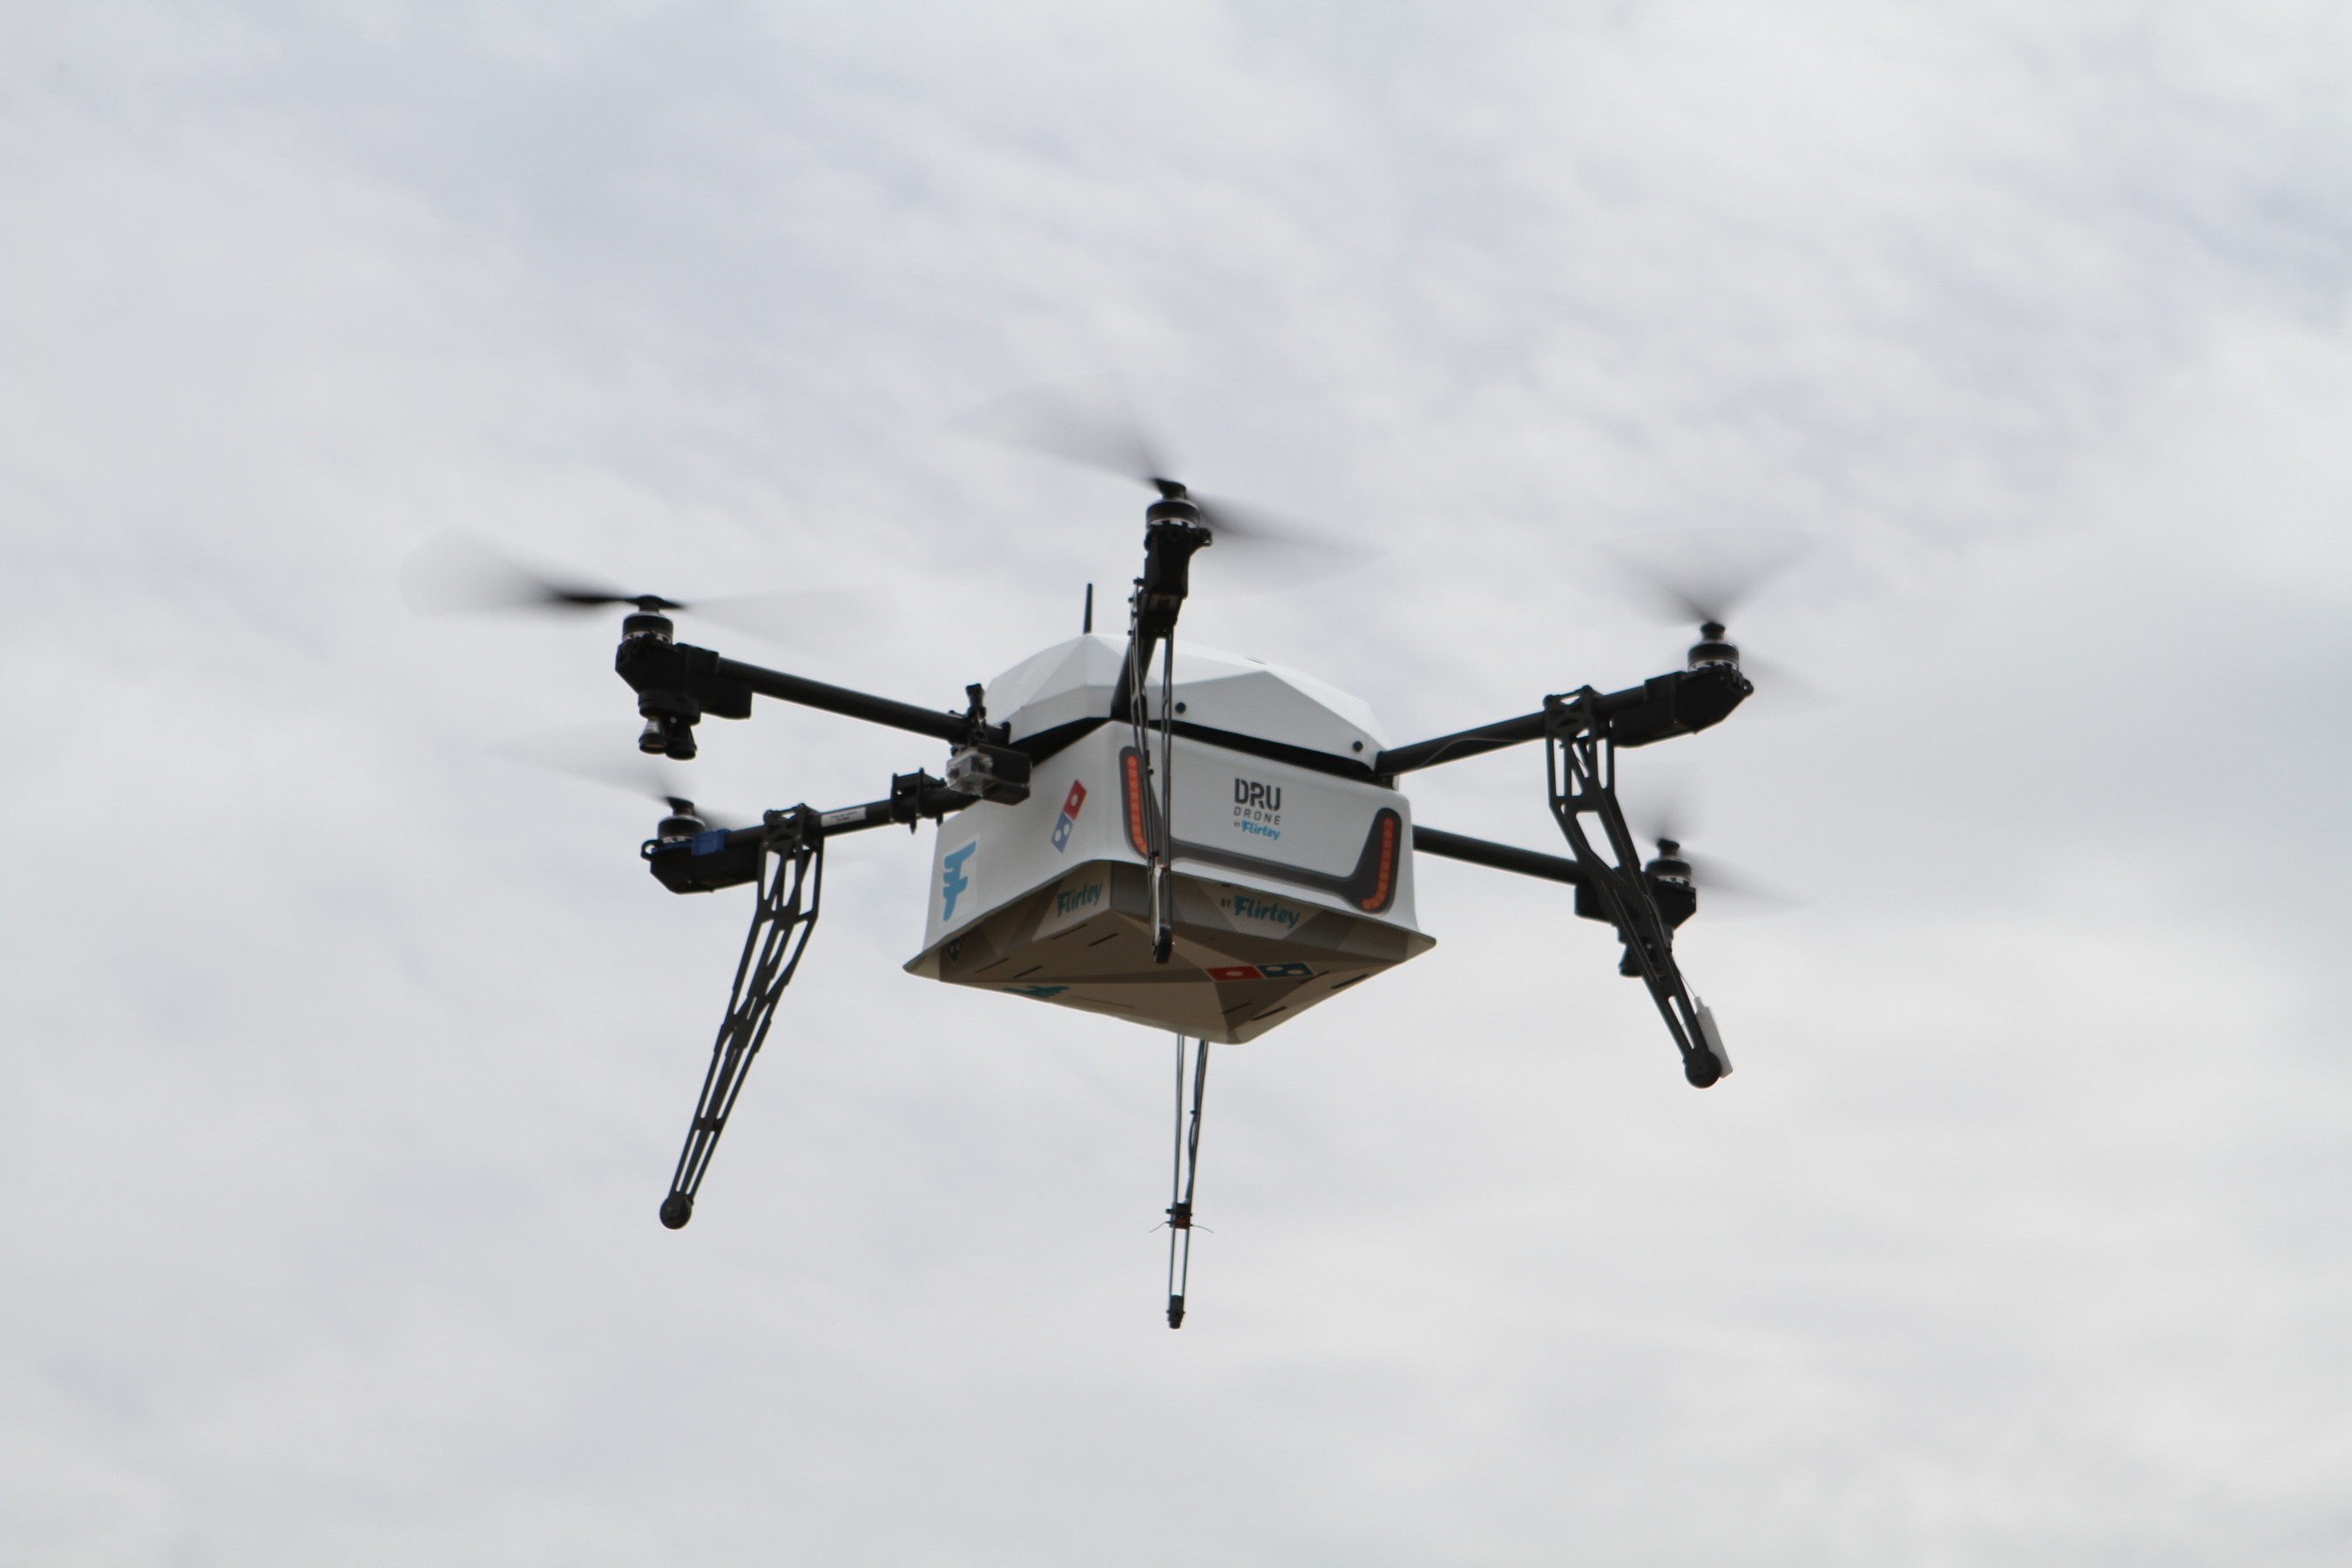 DRU Drone by Flirtey airborne